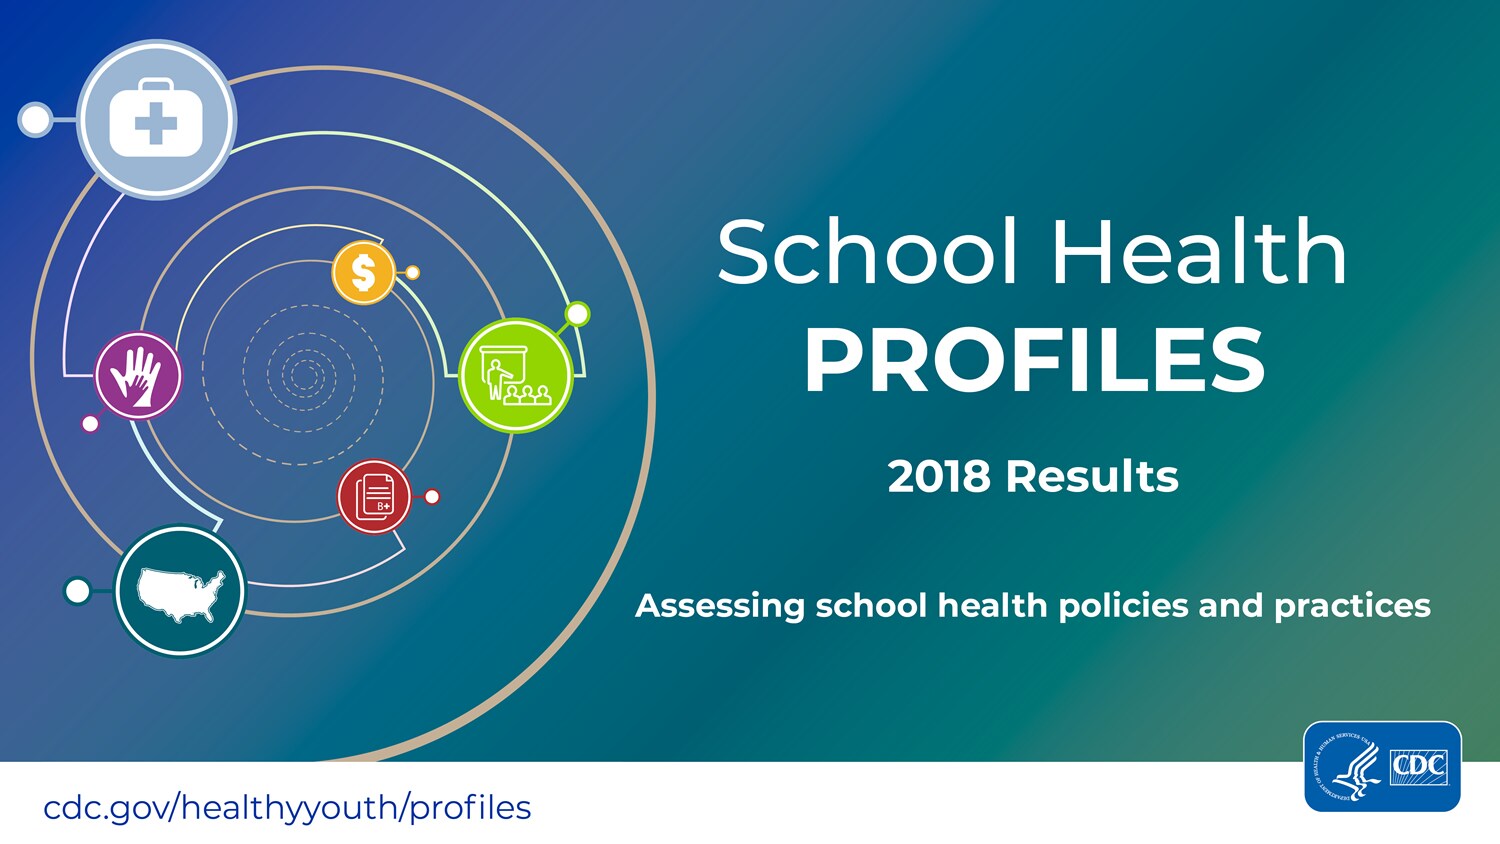 2018 School Health Profiles Infographic: School Health Profiles 2018 Results: Assessing school health policies and practices.